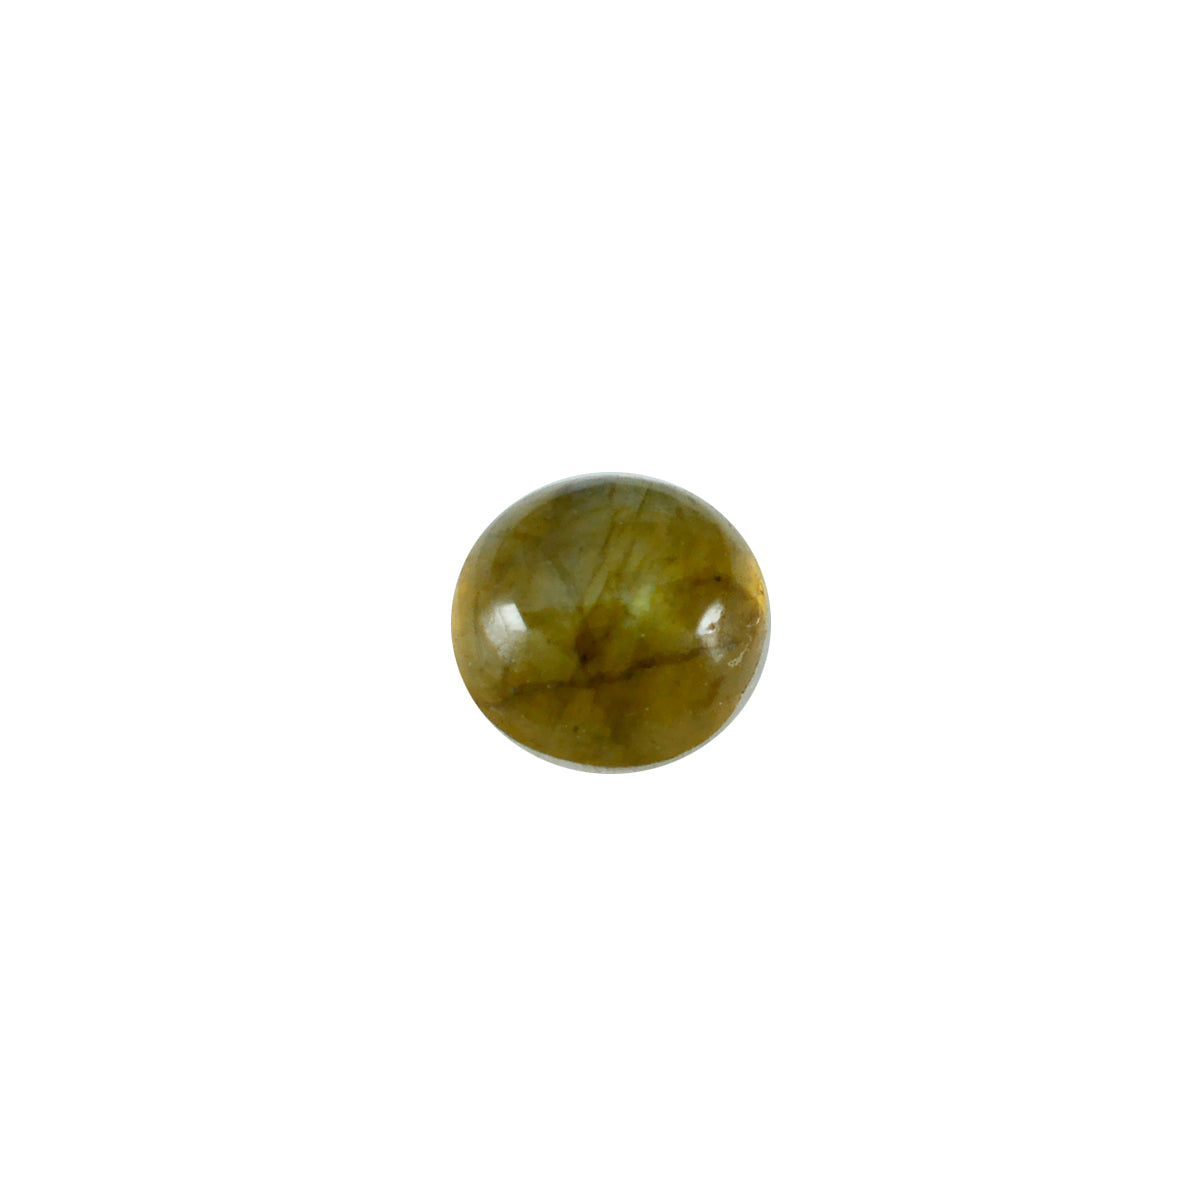 Riyogems 1PC Grey Labradorite Cabochon 12x12 mm Round Shape A+ Quality Gems